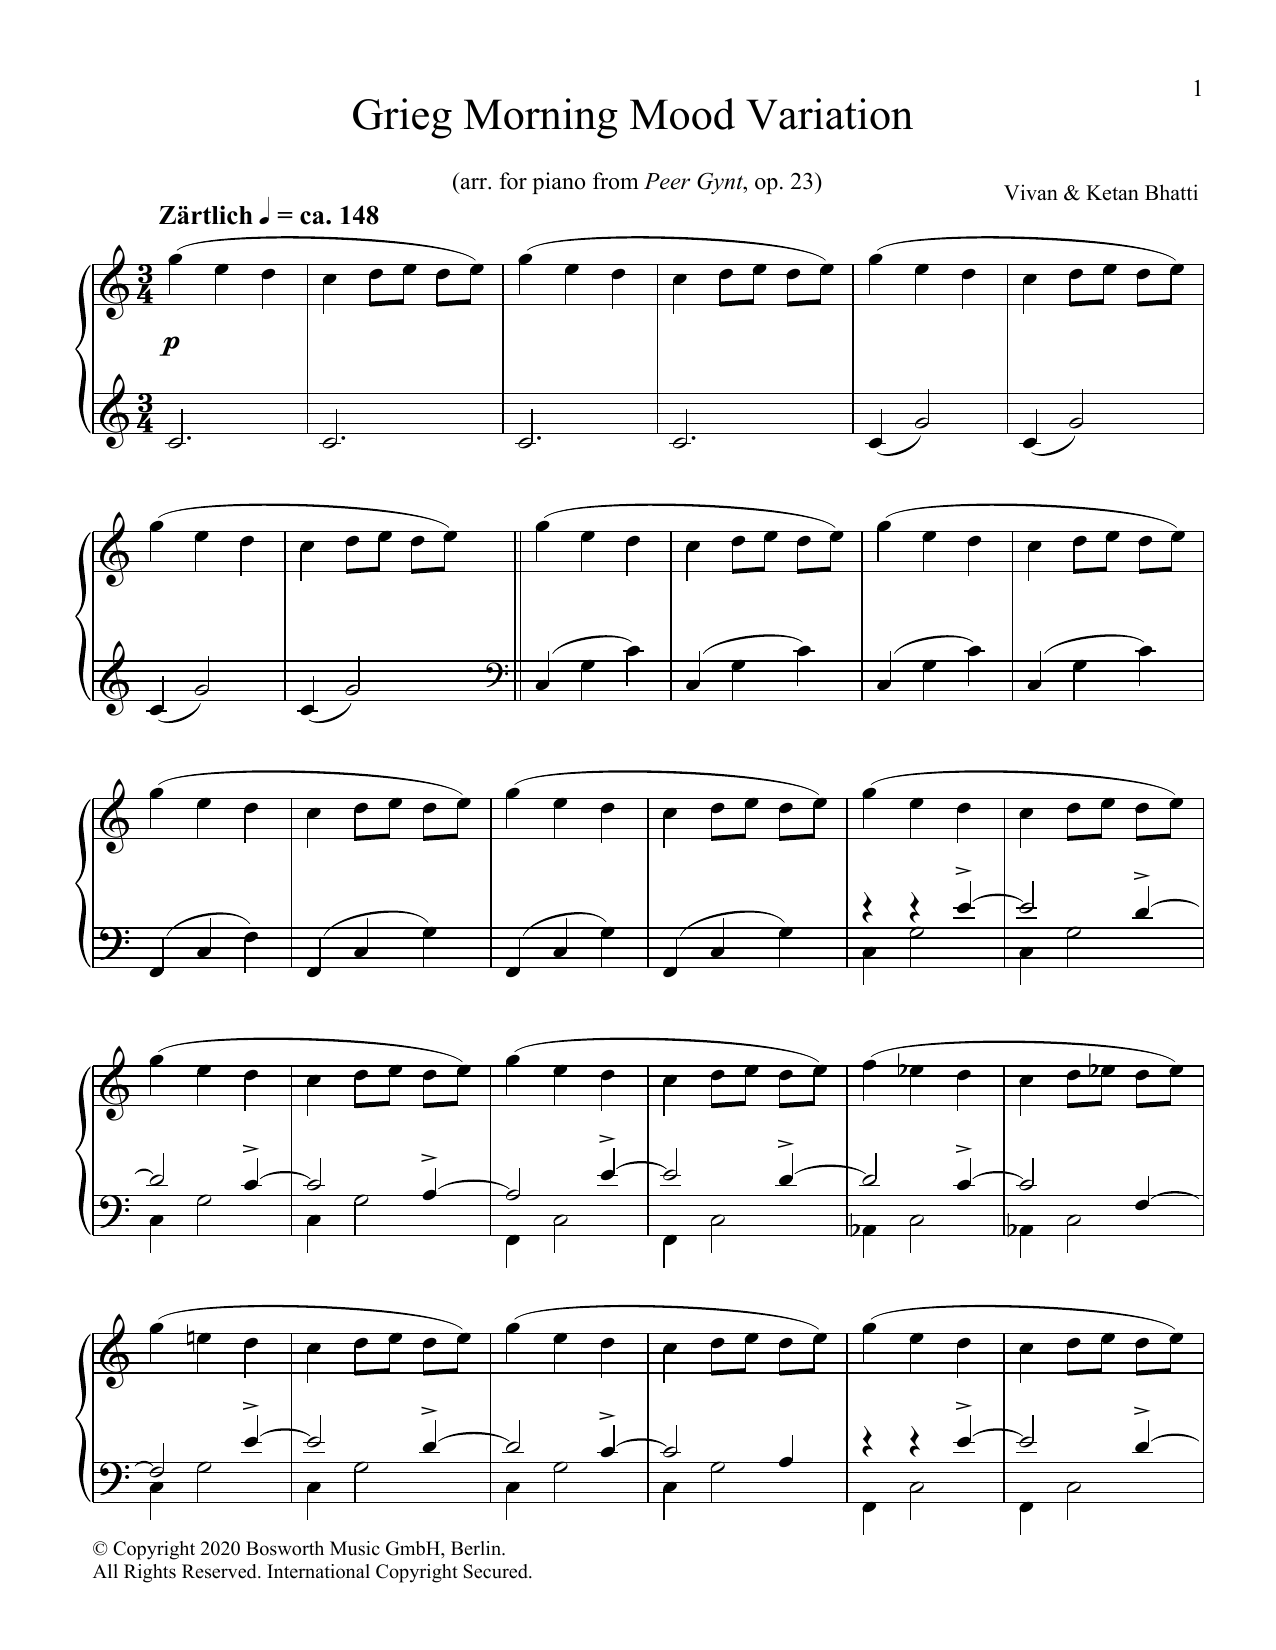 Grieg Morning Mood Variation (Piano Solo) von Ketan & Vivan Bhatti